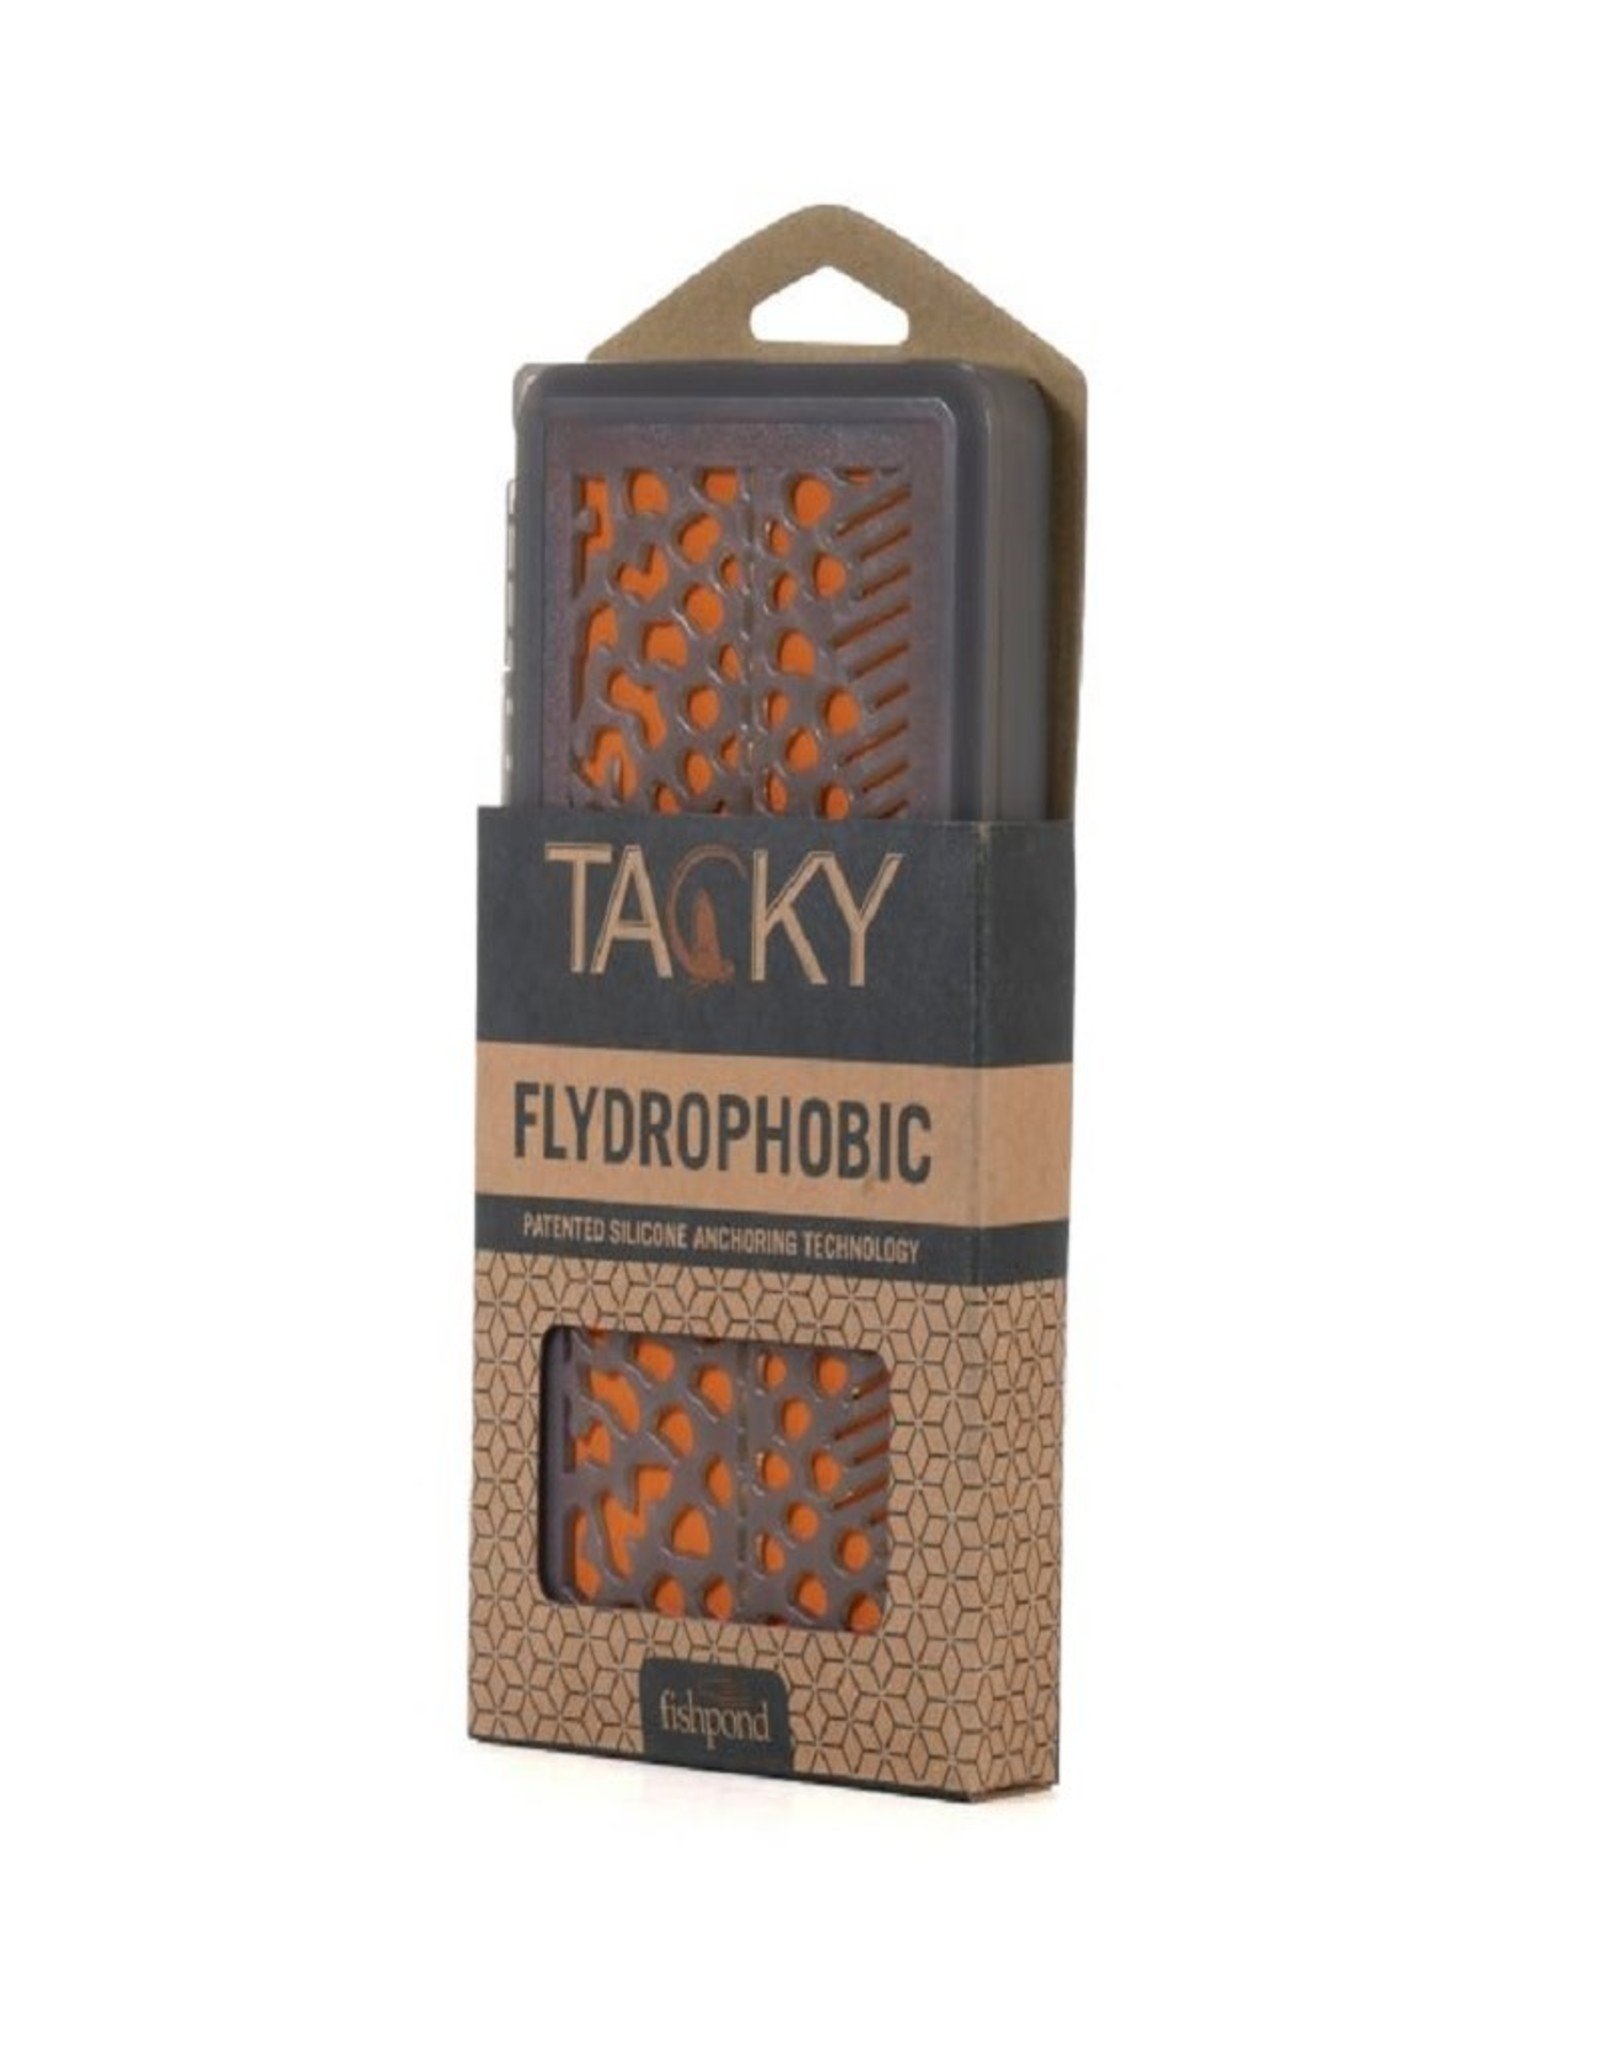 Fishpond Tacky Fly Box